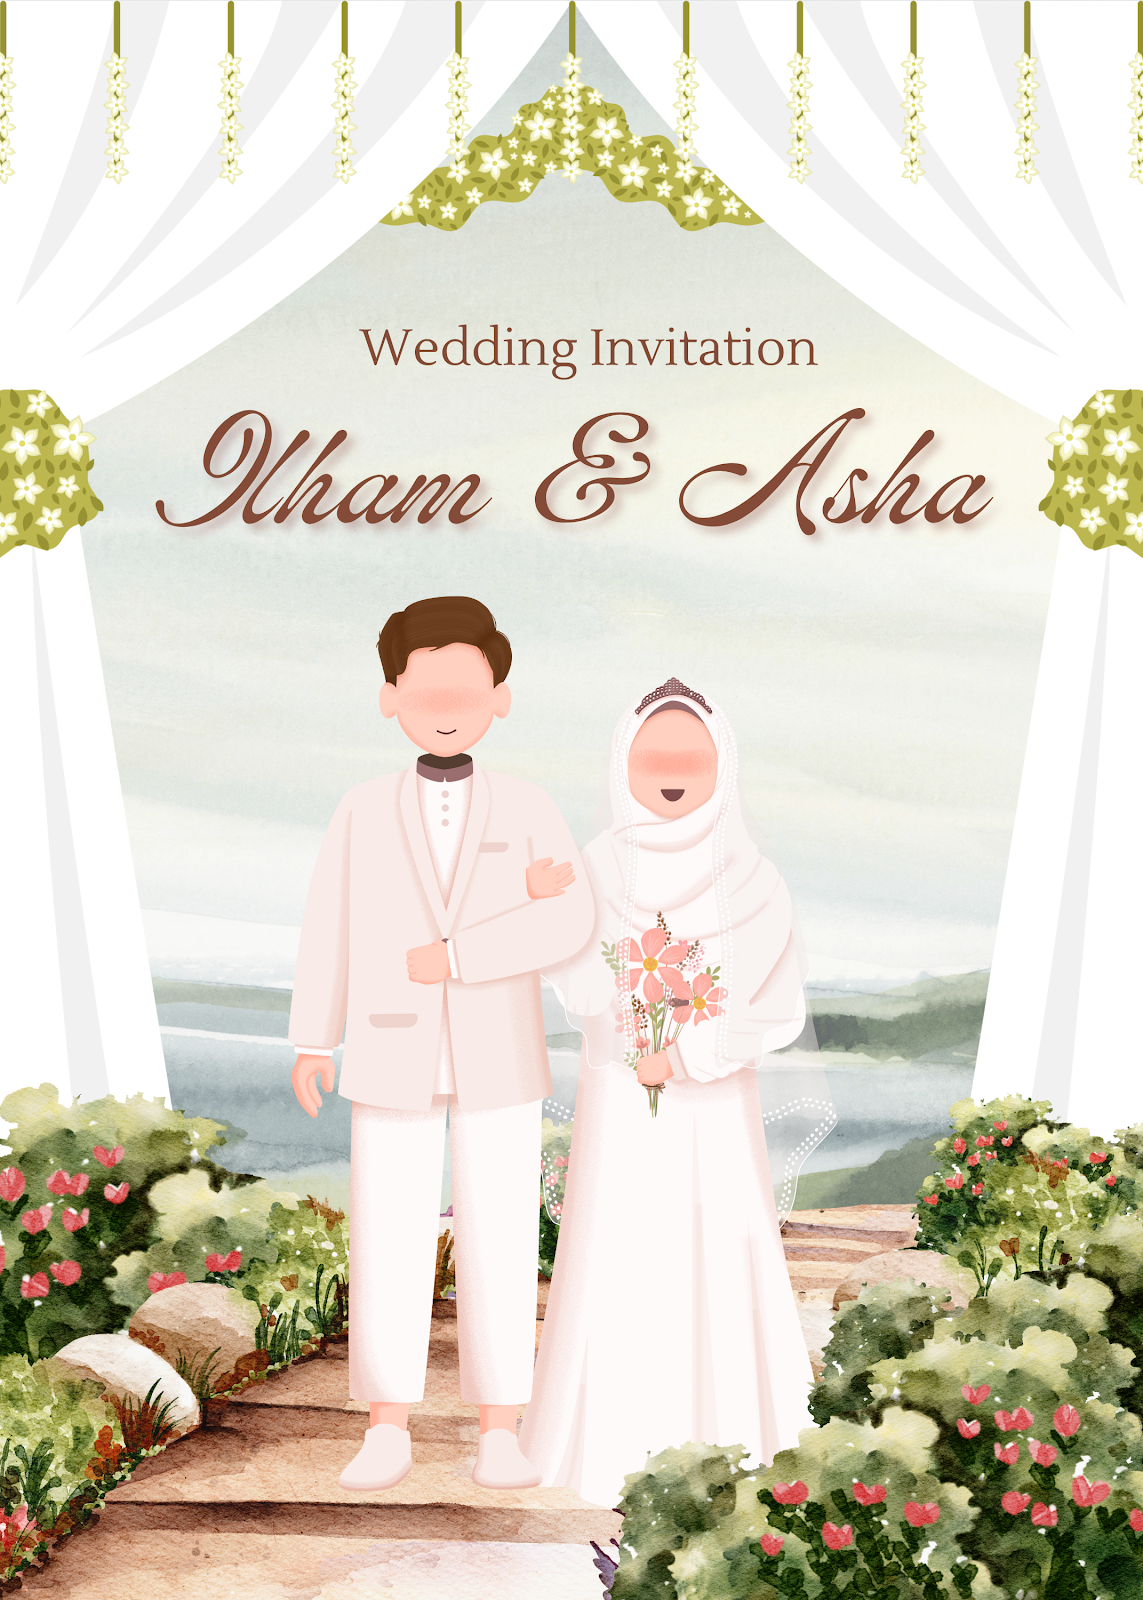 Happy Wedding for Ilham